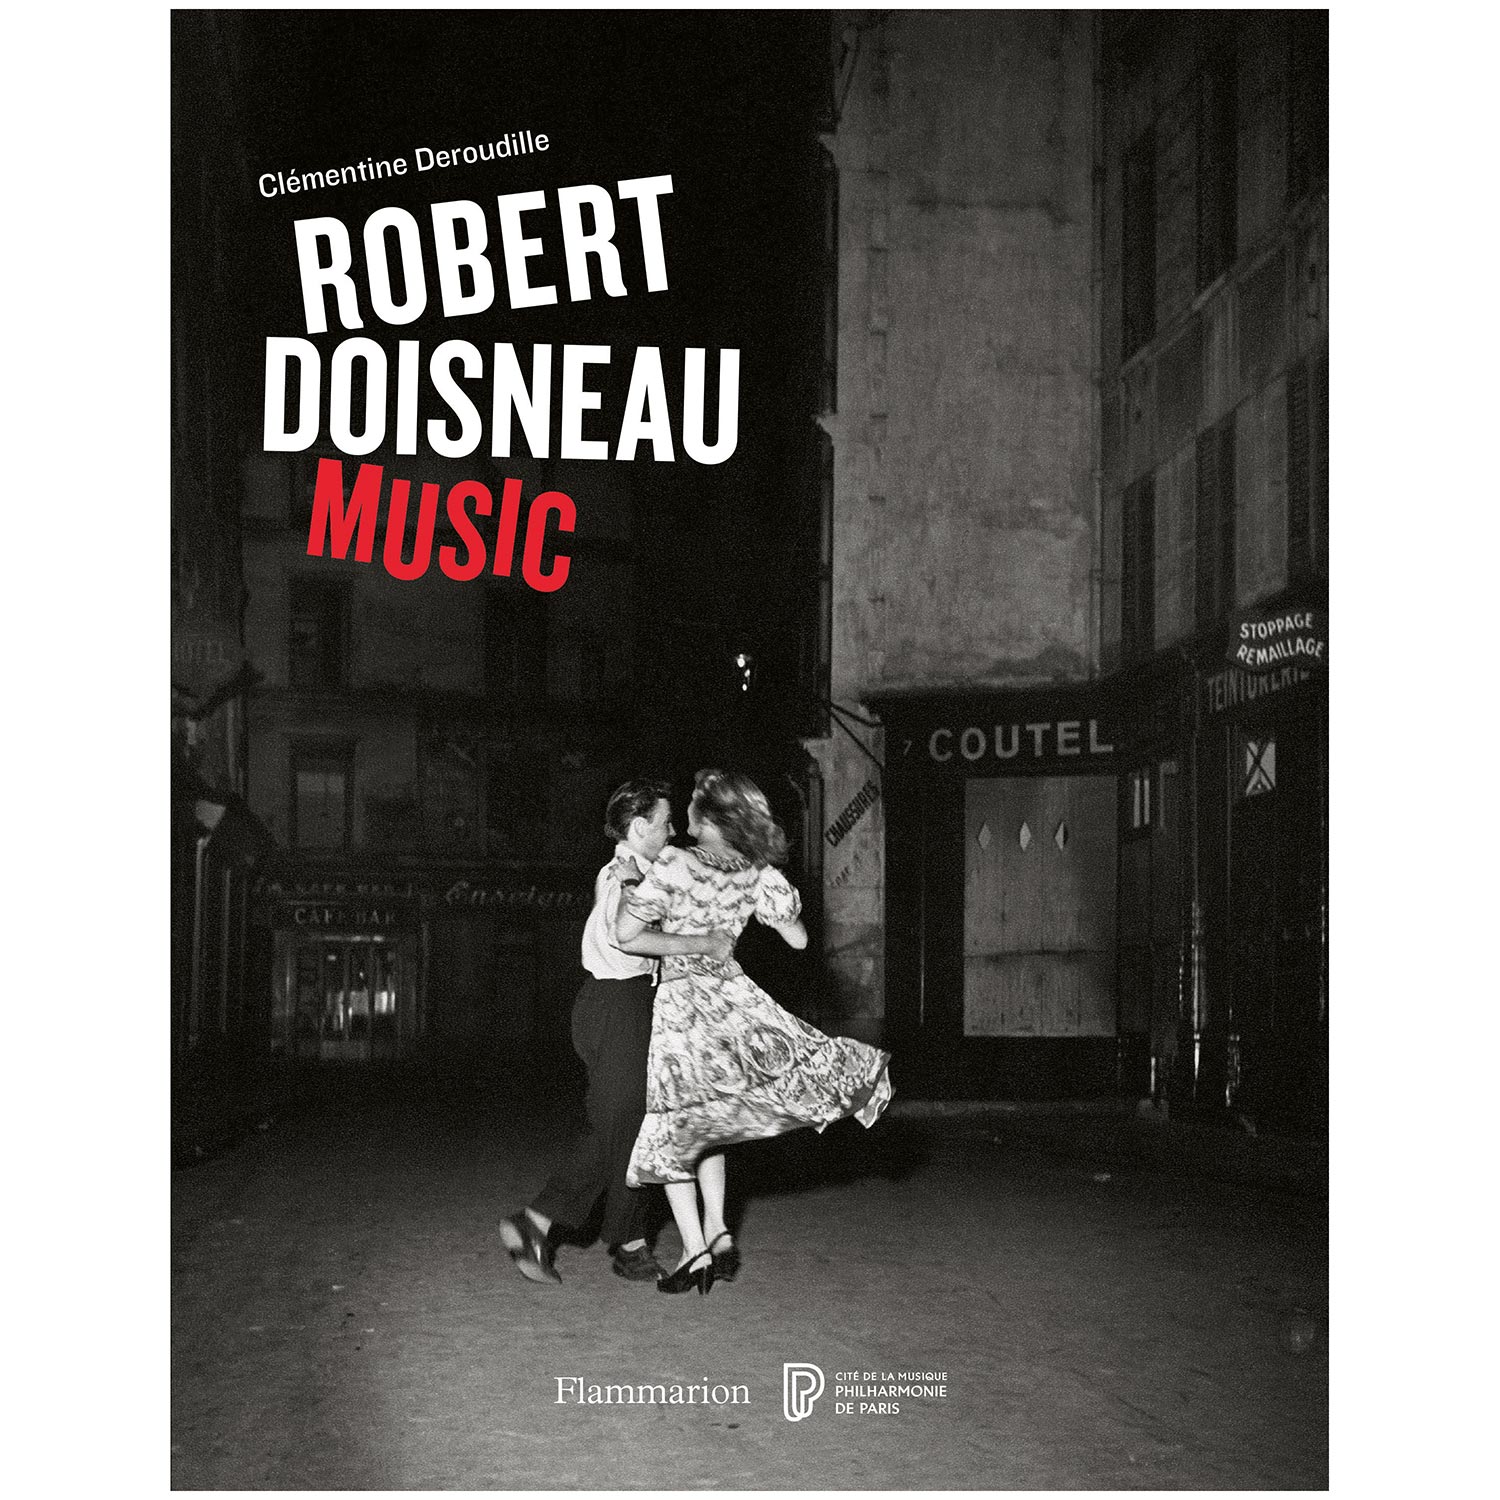 TThumbnail image for Clémentine Deroudille - Robert Doisneau Music